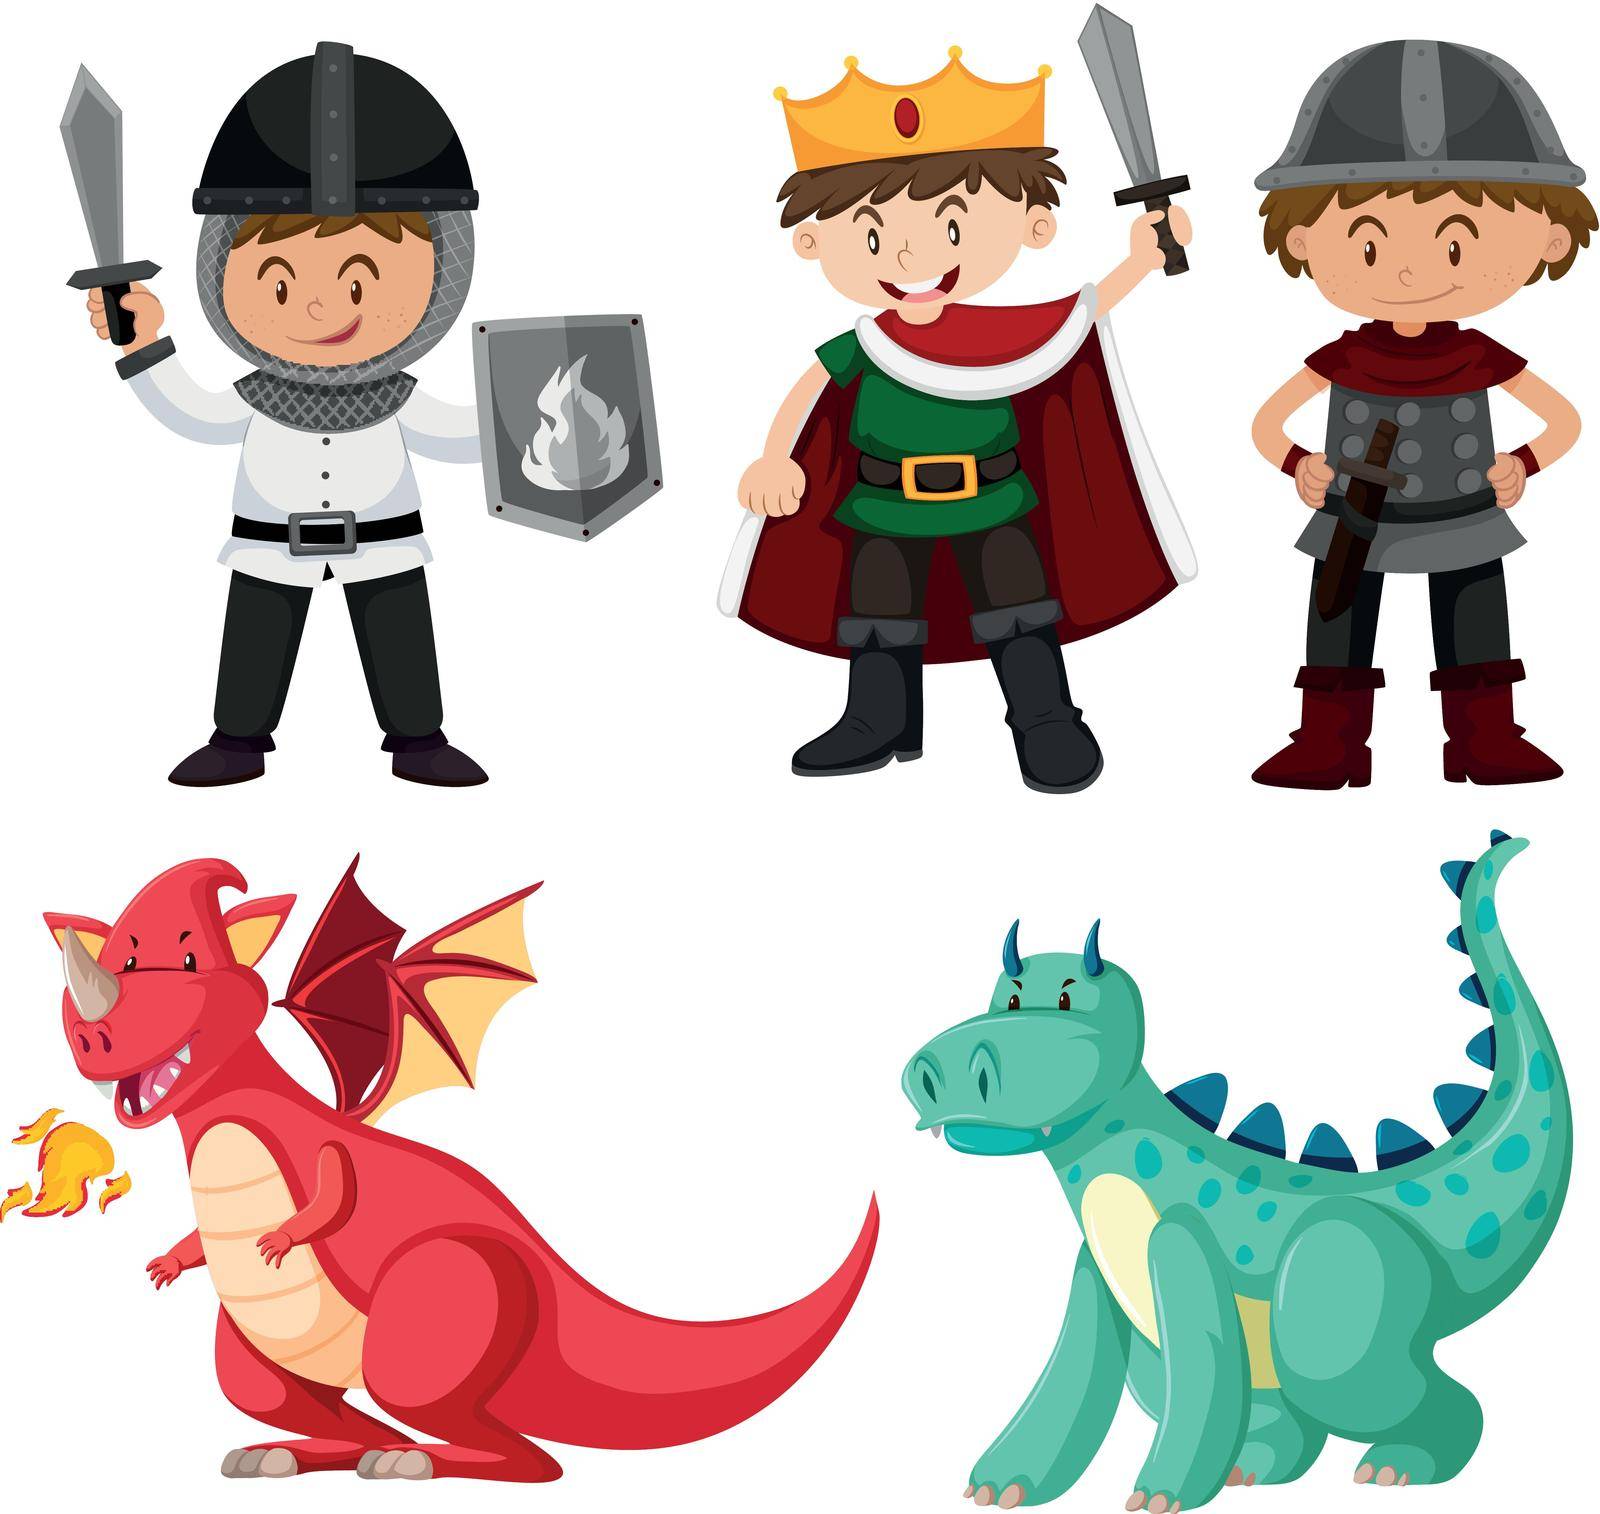 Dragon and kind character illustration